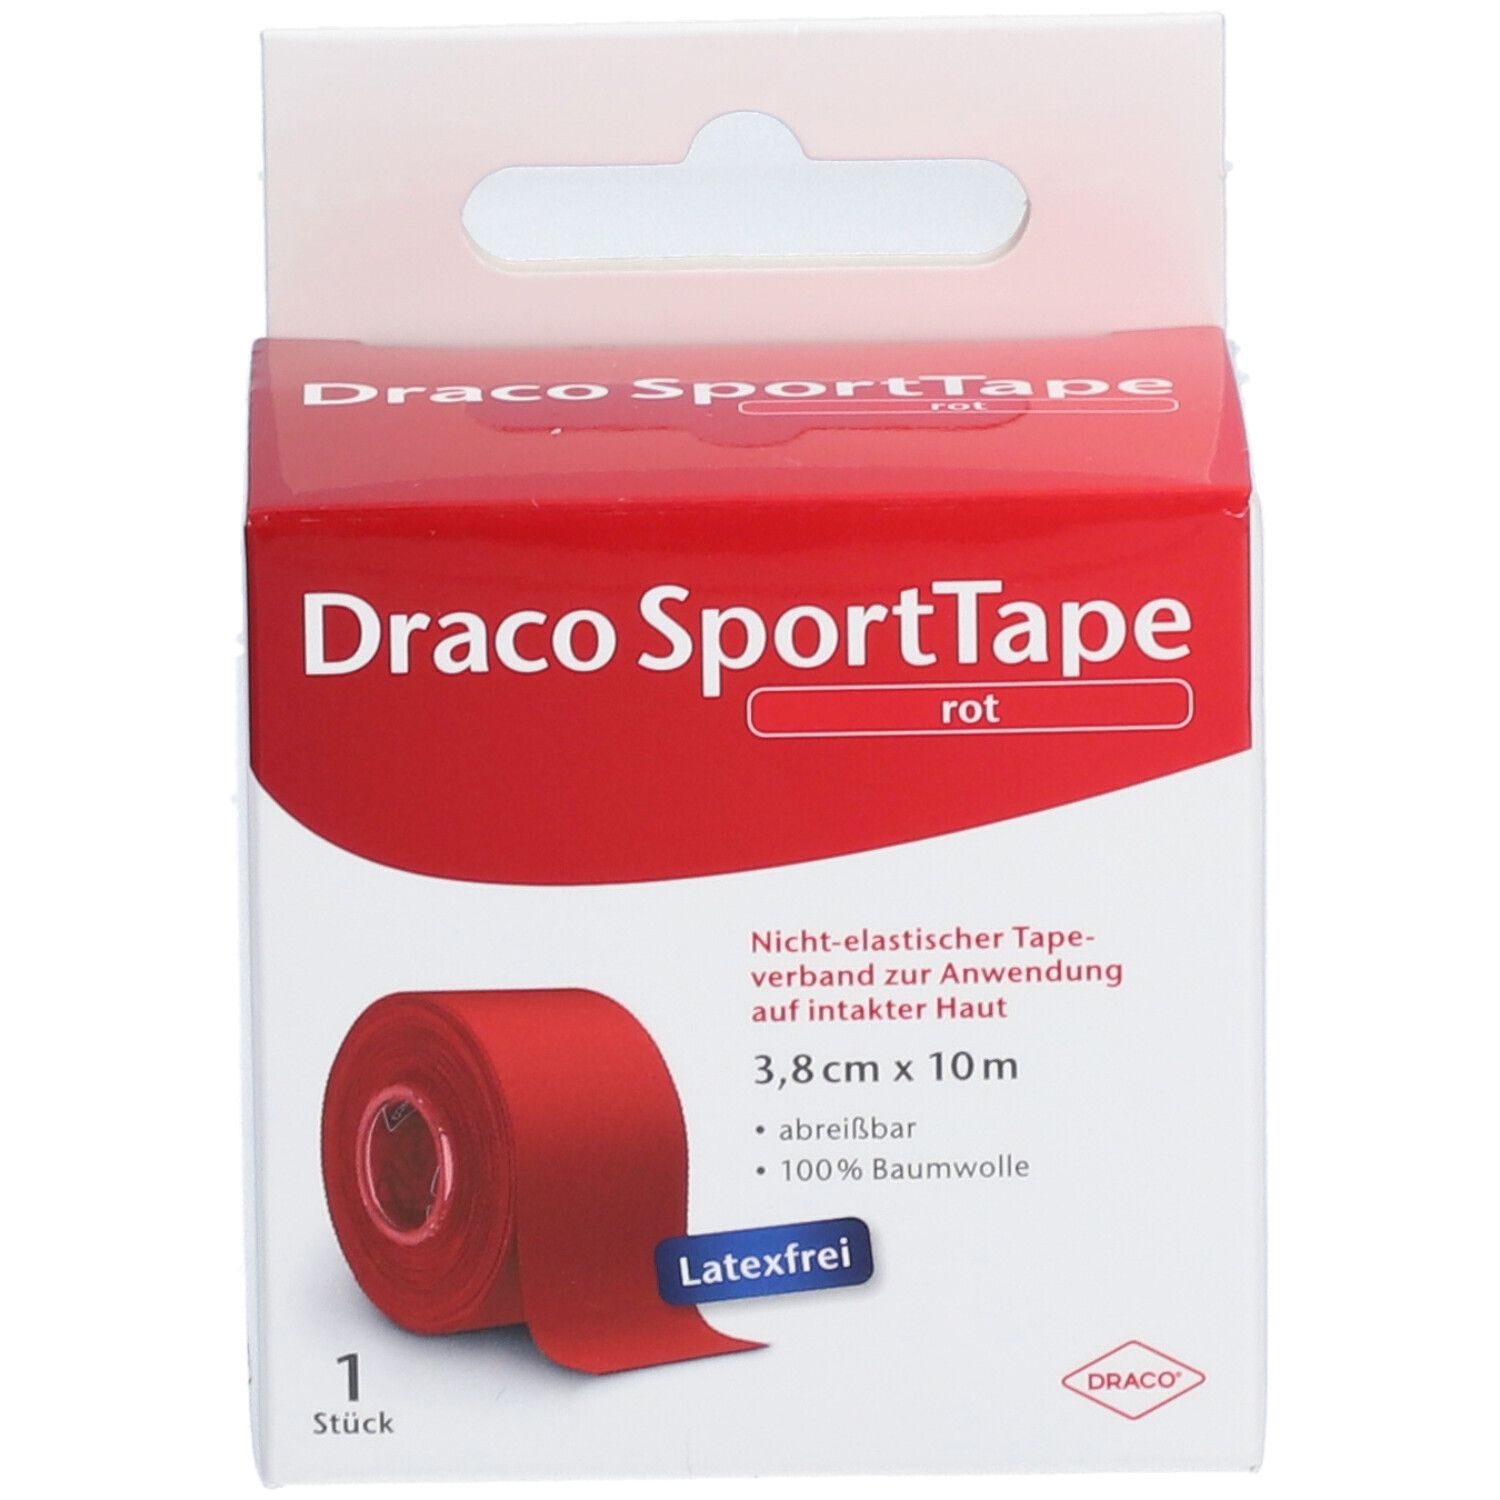 Draco SportTape 3,8 cm x 10 m rot